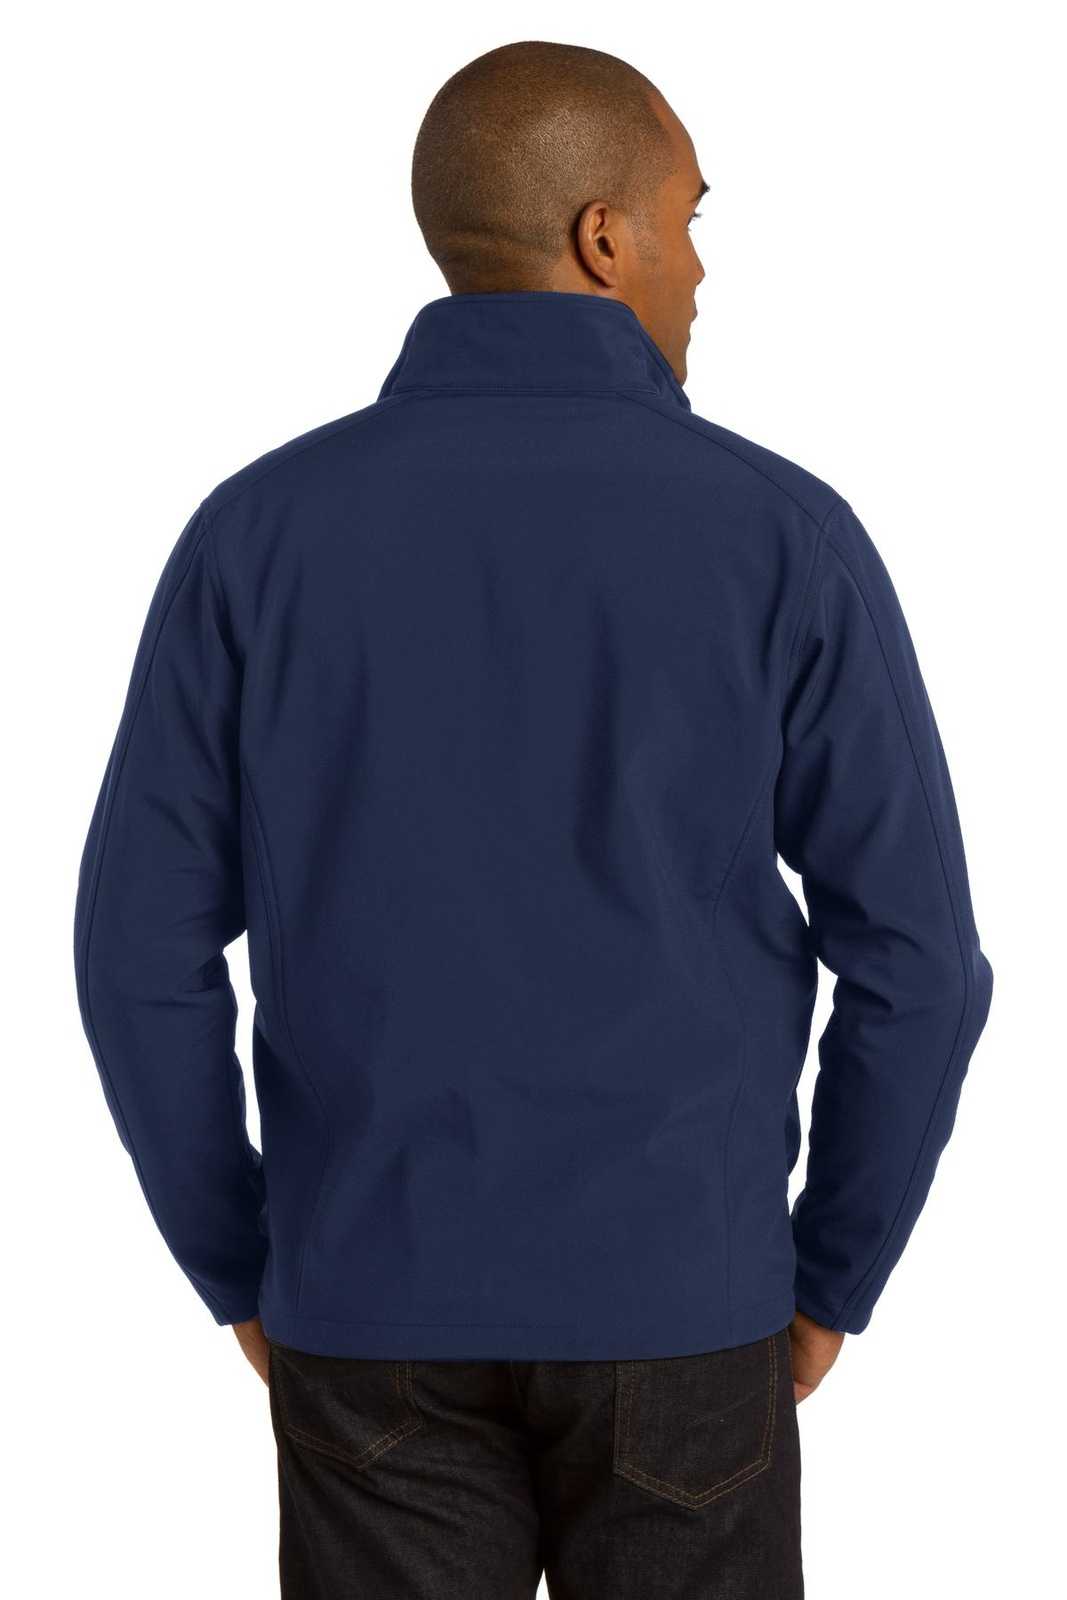 Port Authority J317 Core Soft Shell Jacket - Dress Blue Navy - HIT a Double - 1